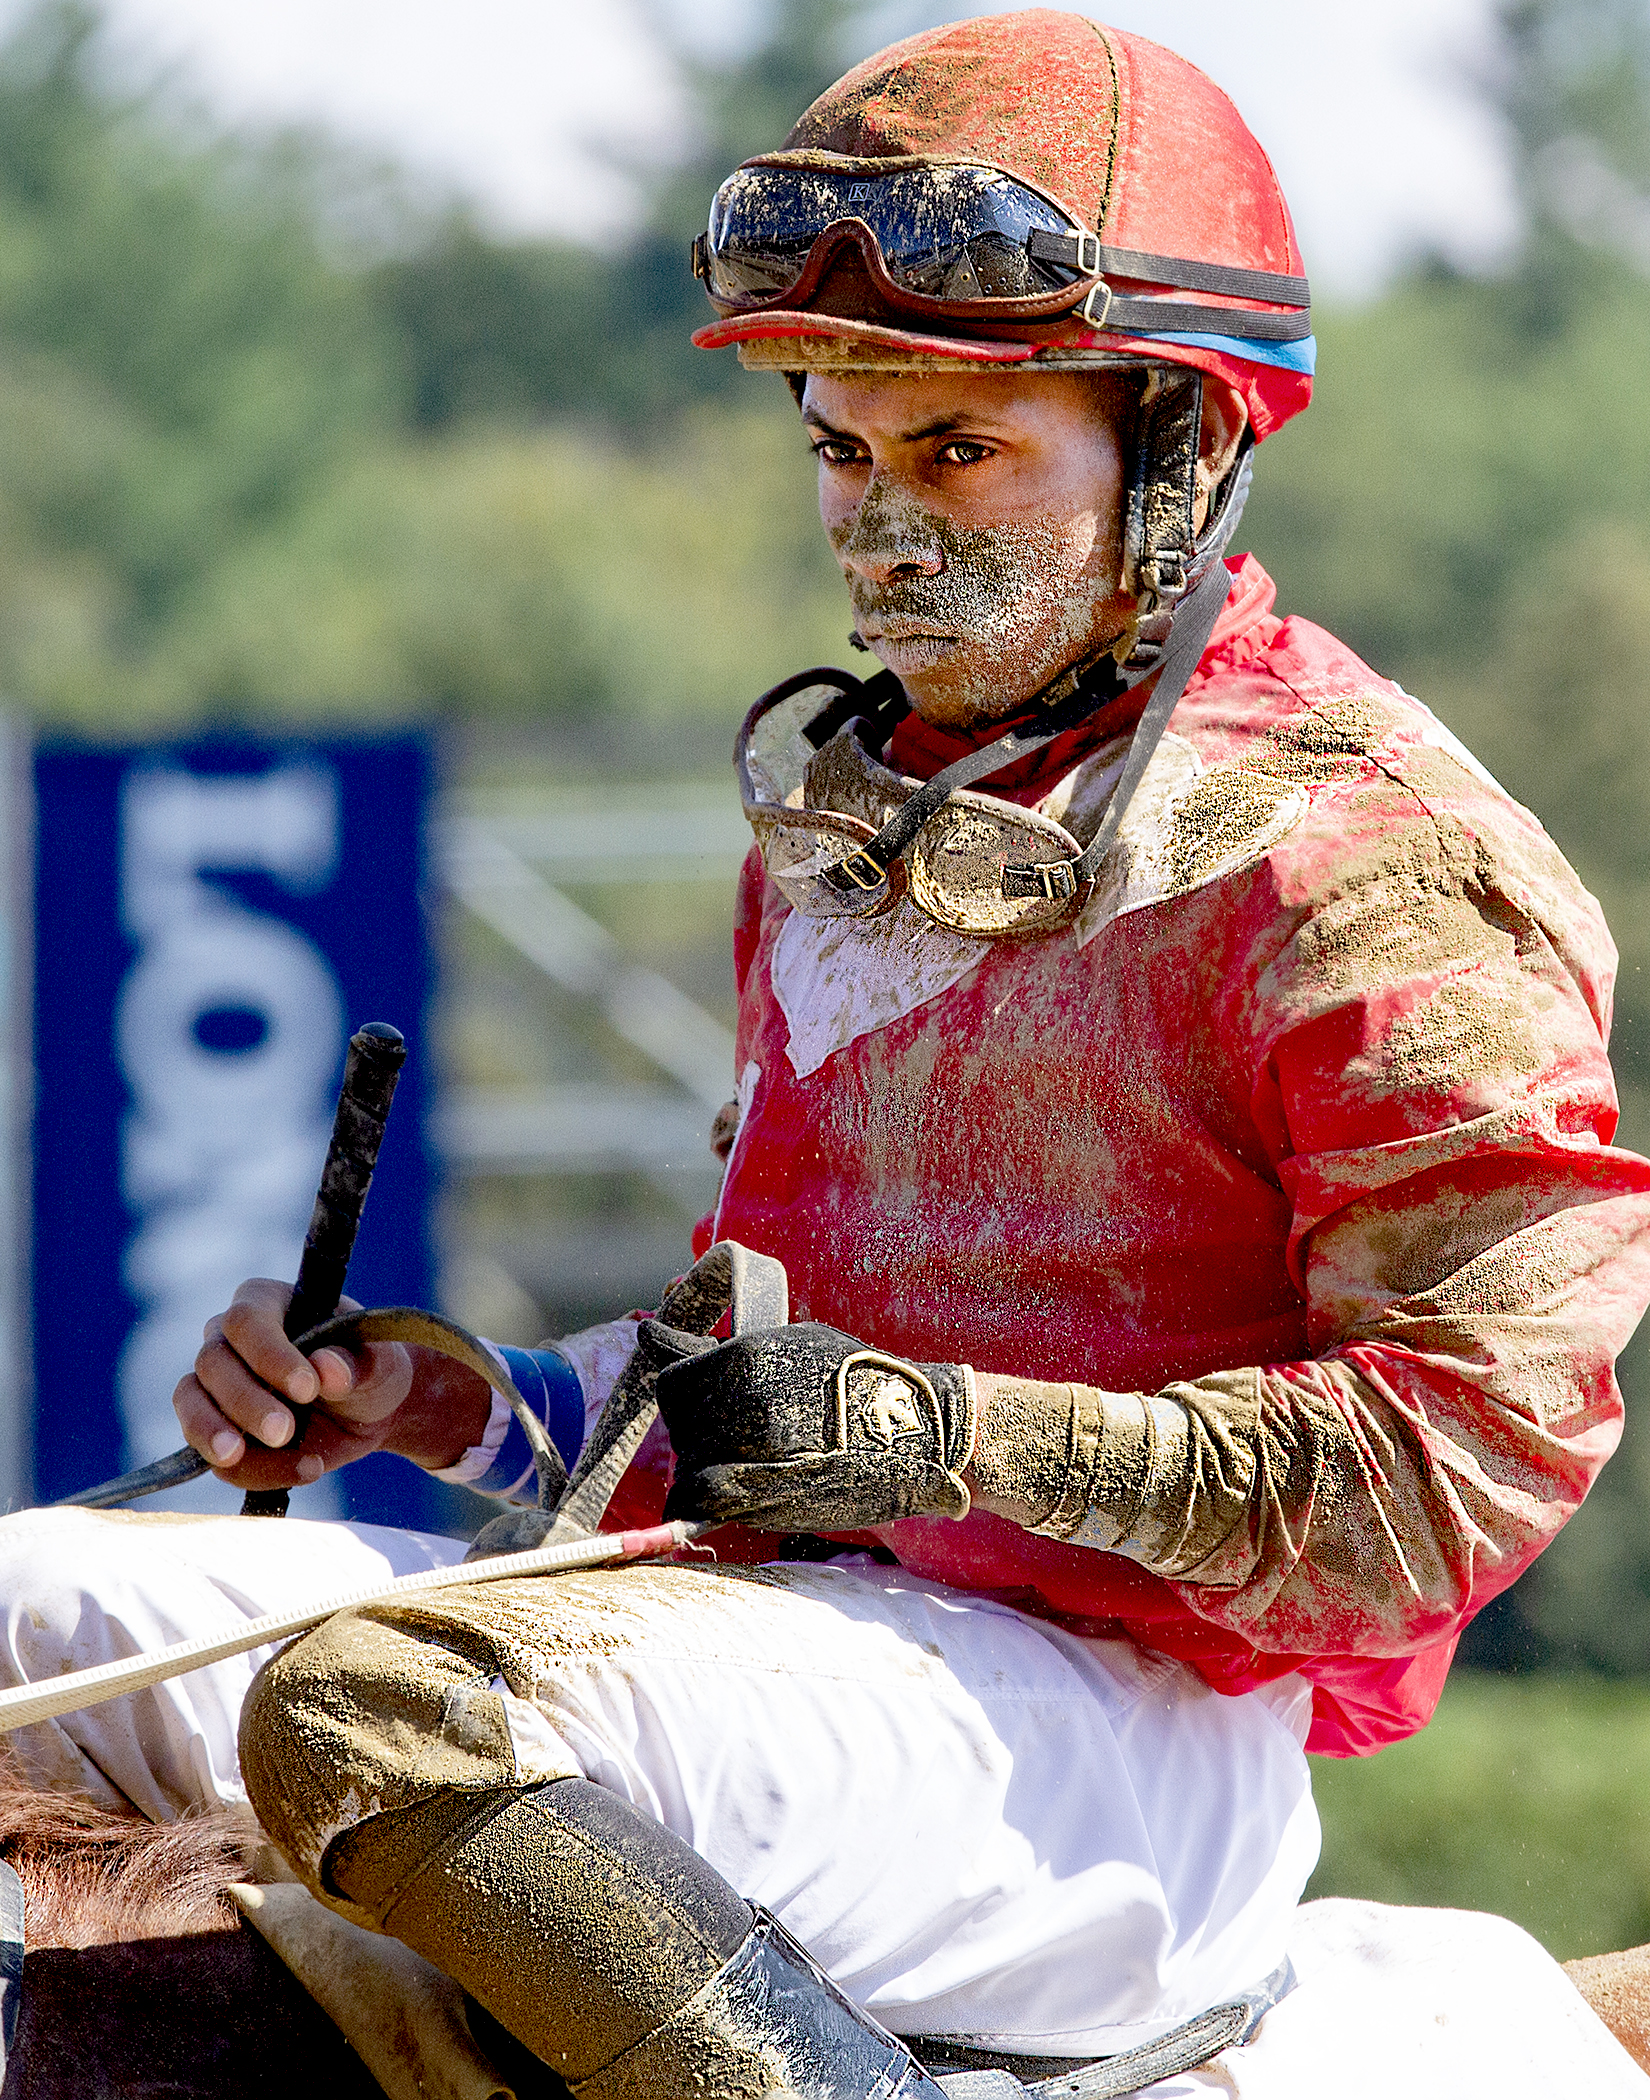 "Mud on Manny (Jockey Manuel Franco at Saratoga Race Course, Aug. 2019)" (Saratoga Race Course, Saratoga Springs, NY  - August 2019), photograph by Debbie Krohl